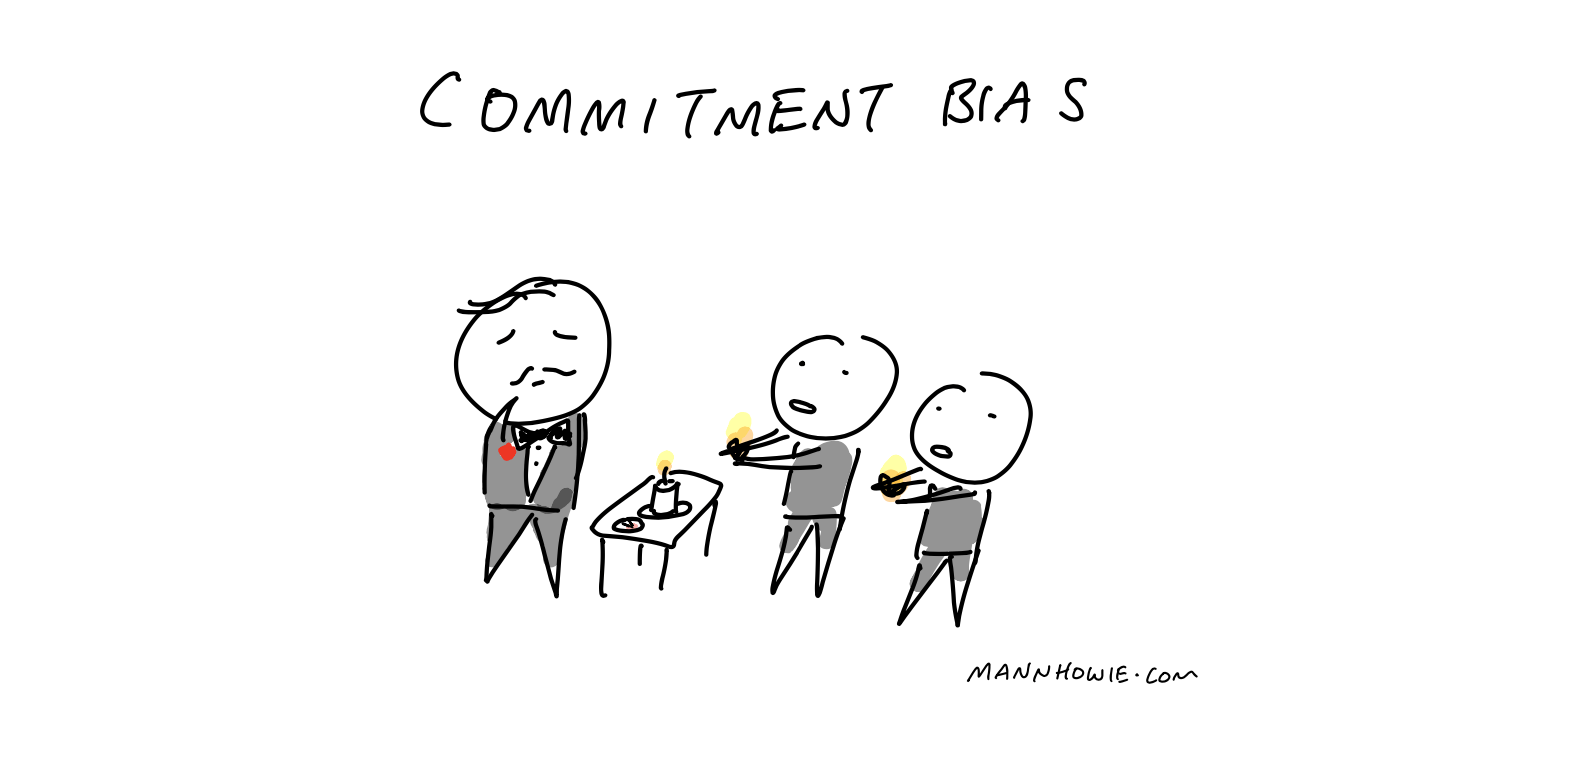 commitment-bias